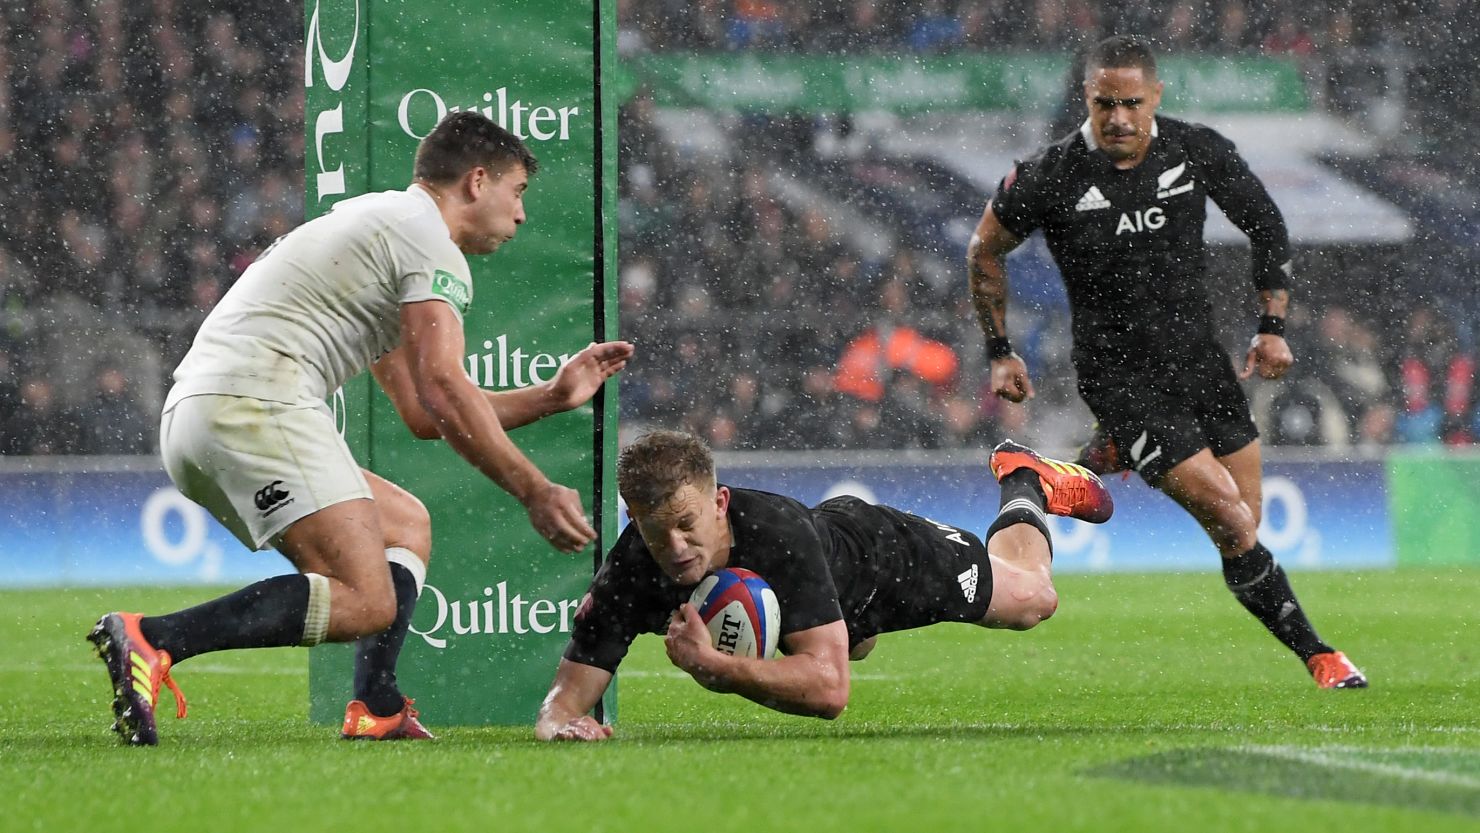 New Zealand's All Blacks beat England 16-15 in a thriller at Twickenham.